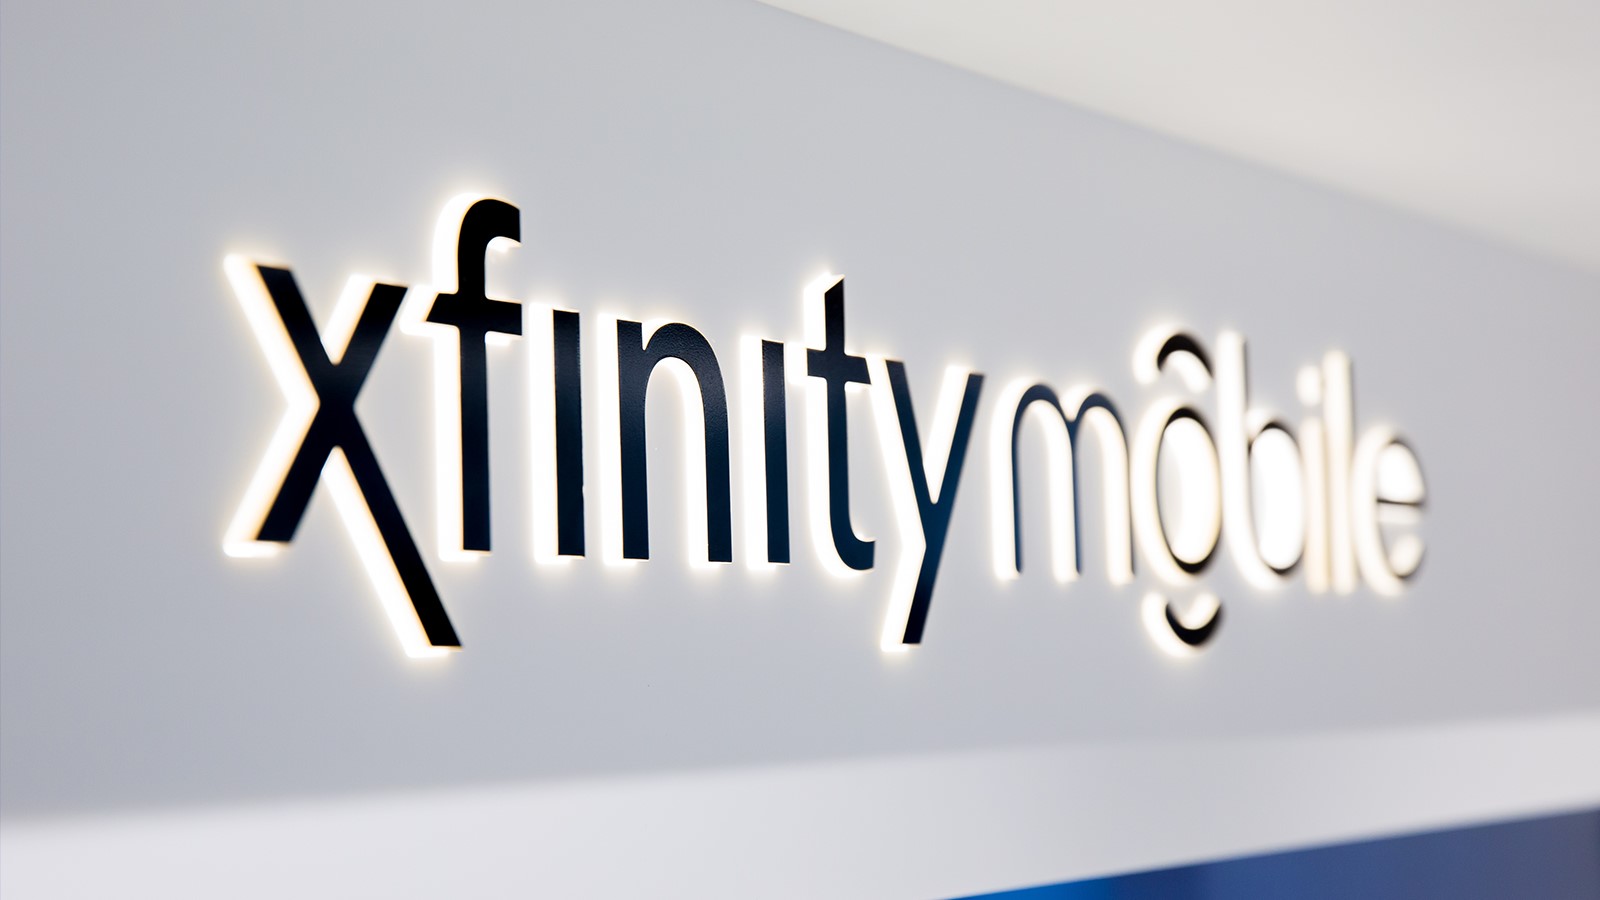 Xfinity mobile logo